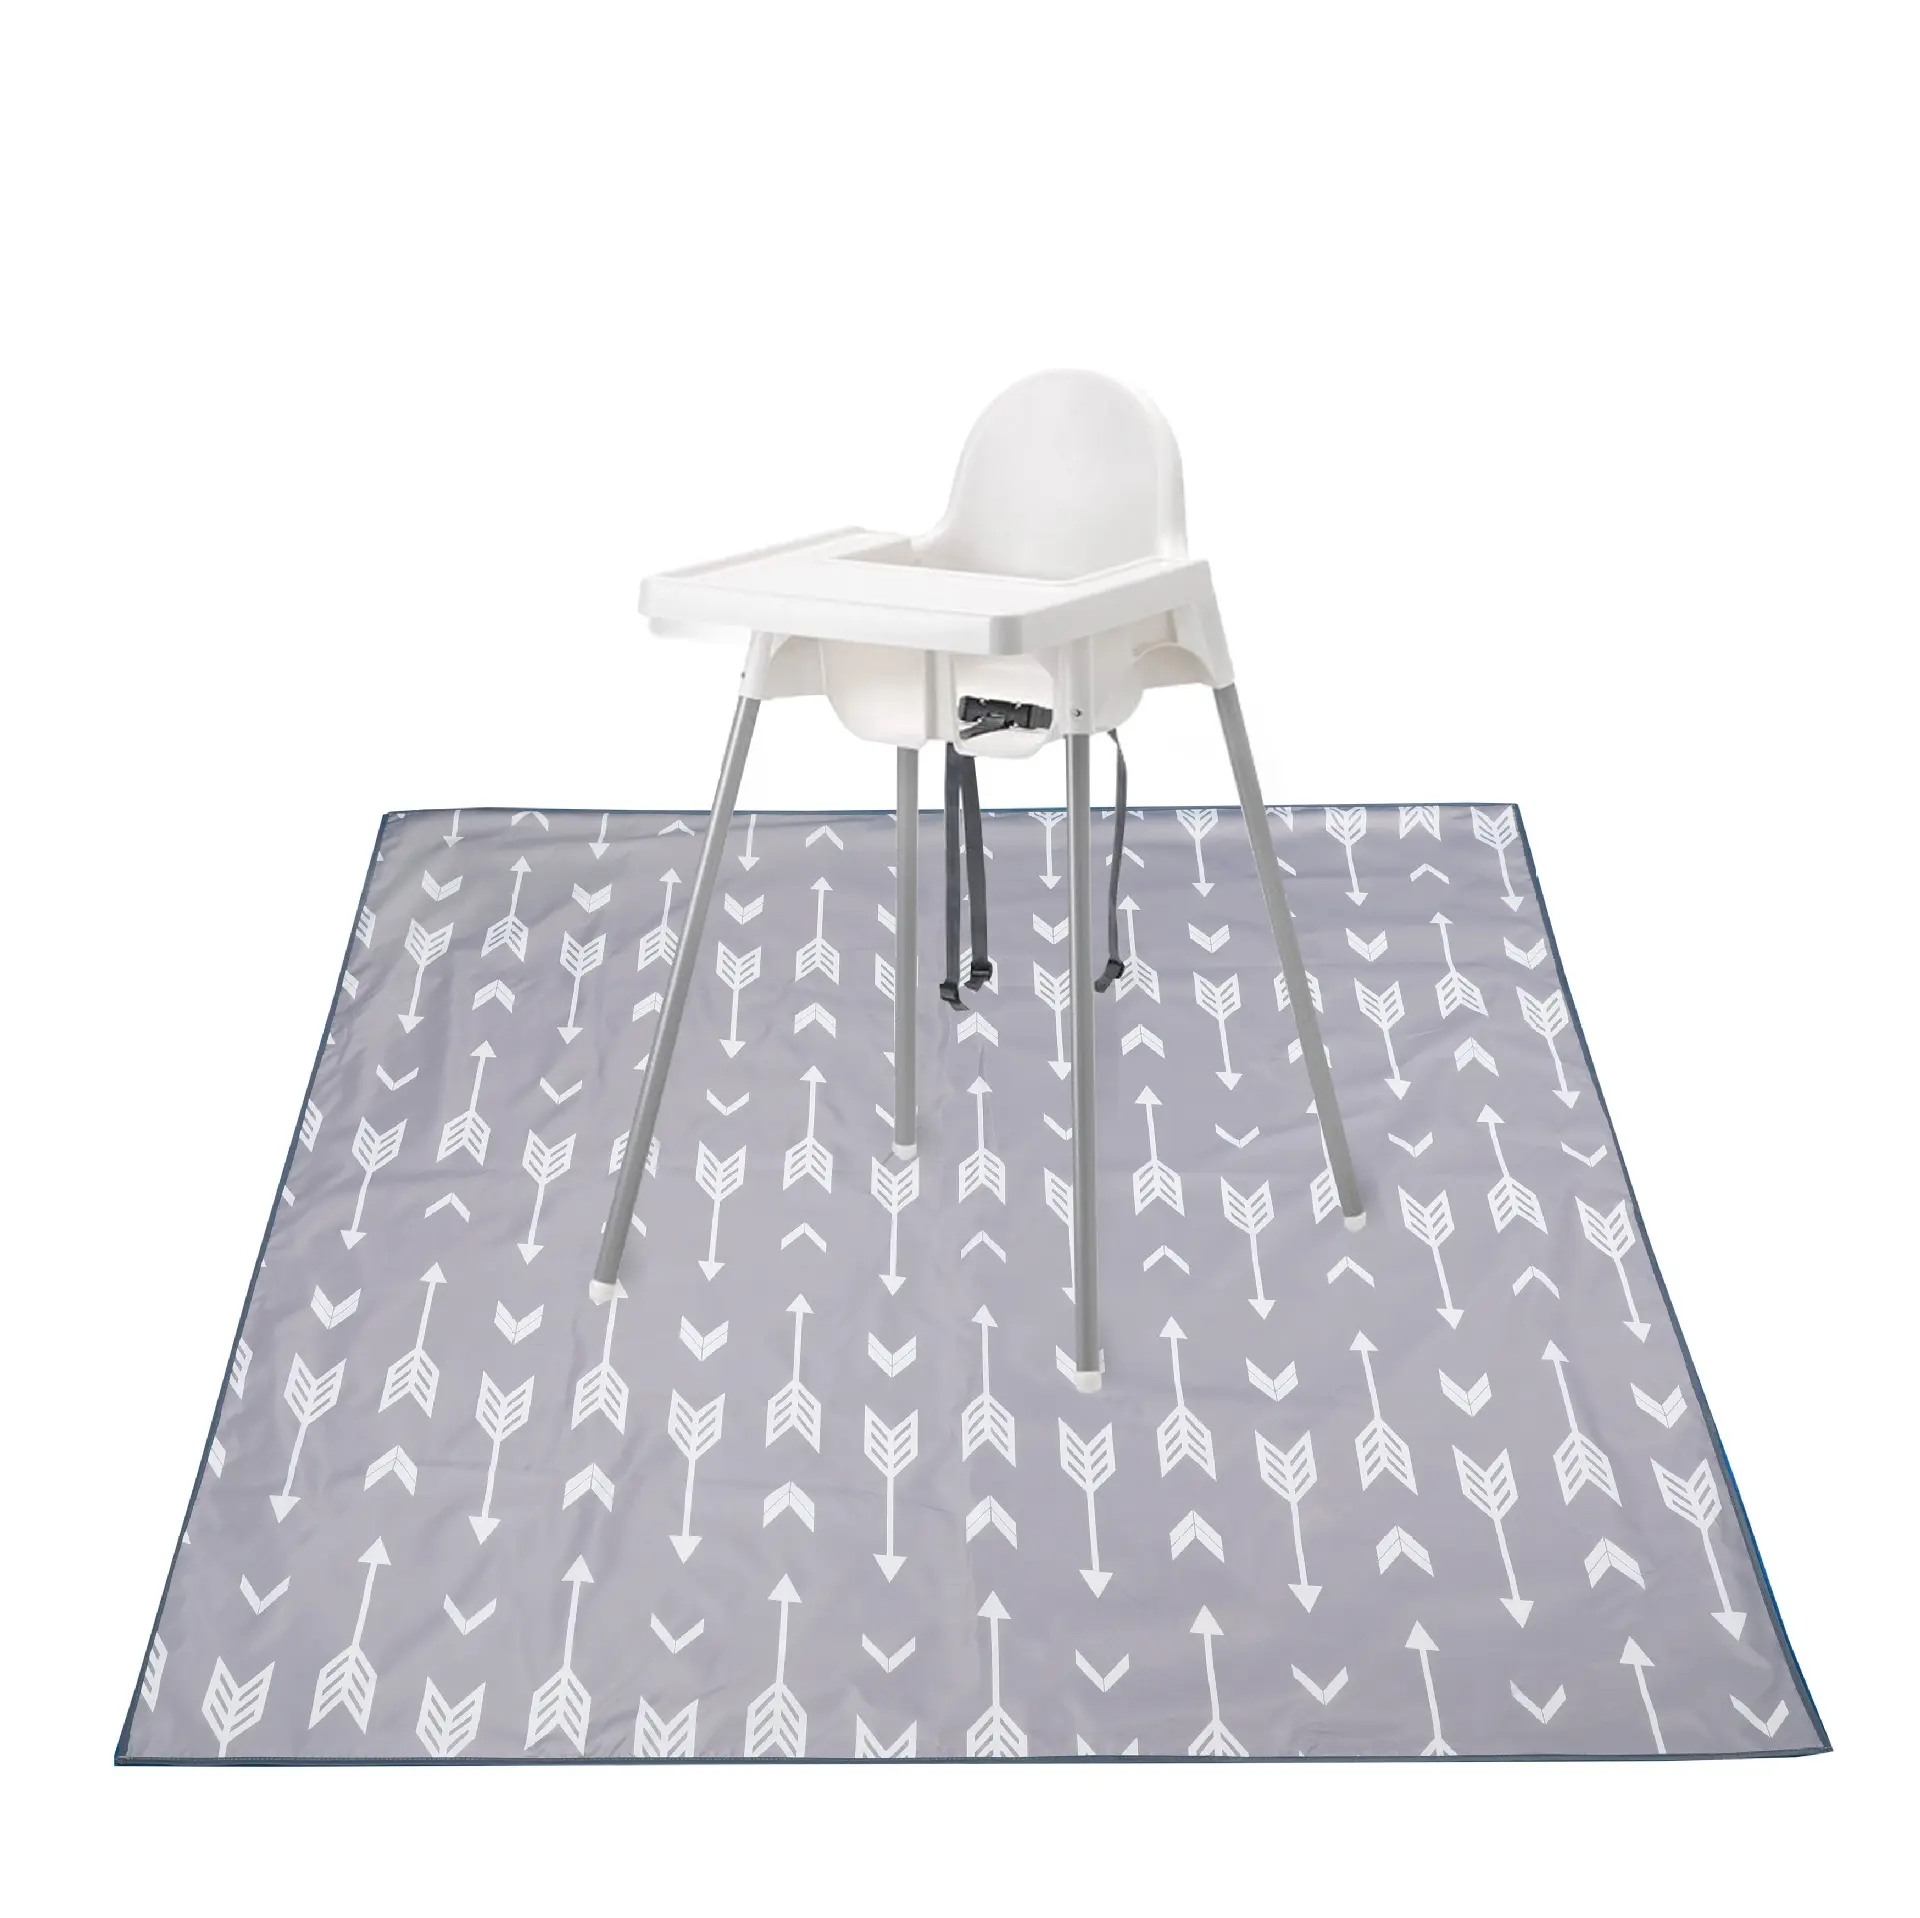 waterproof baby floor splat mat for under high chair